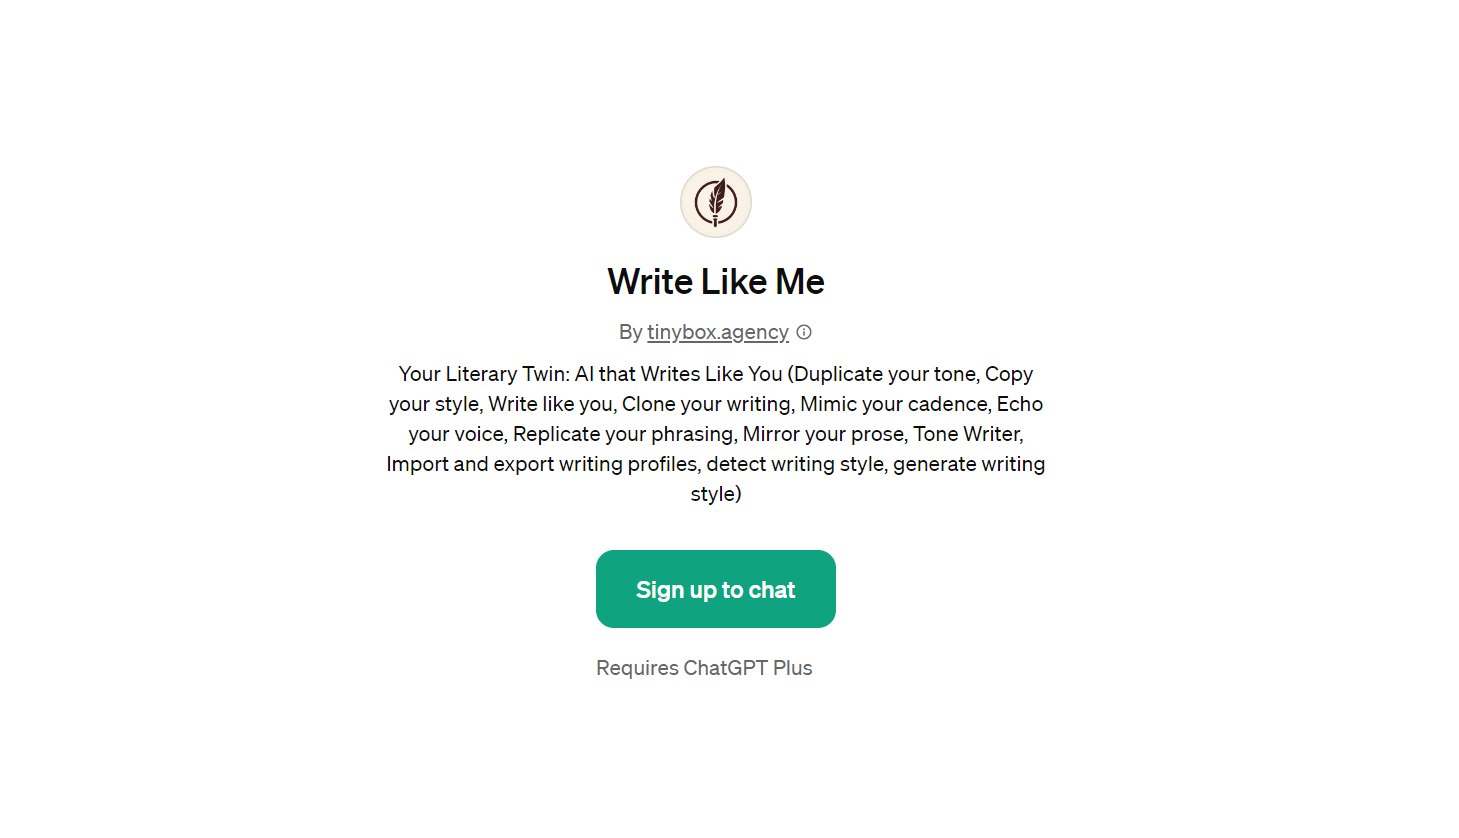 Write Like Me - Your Literary Twin